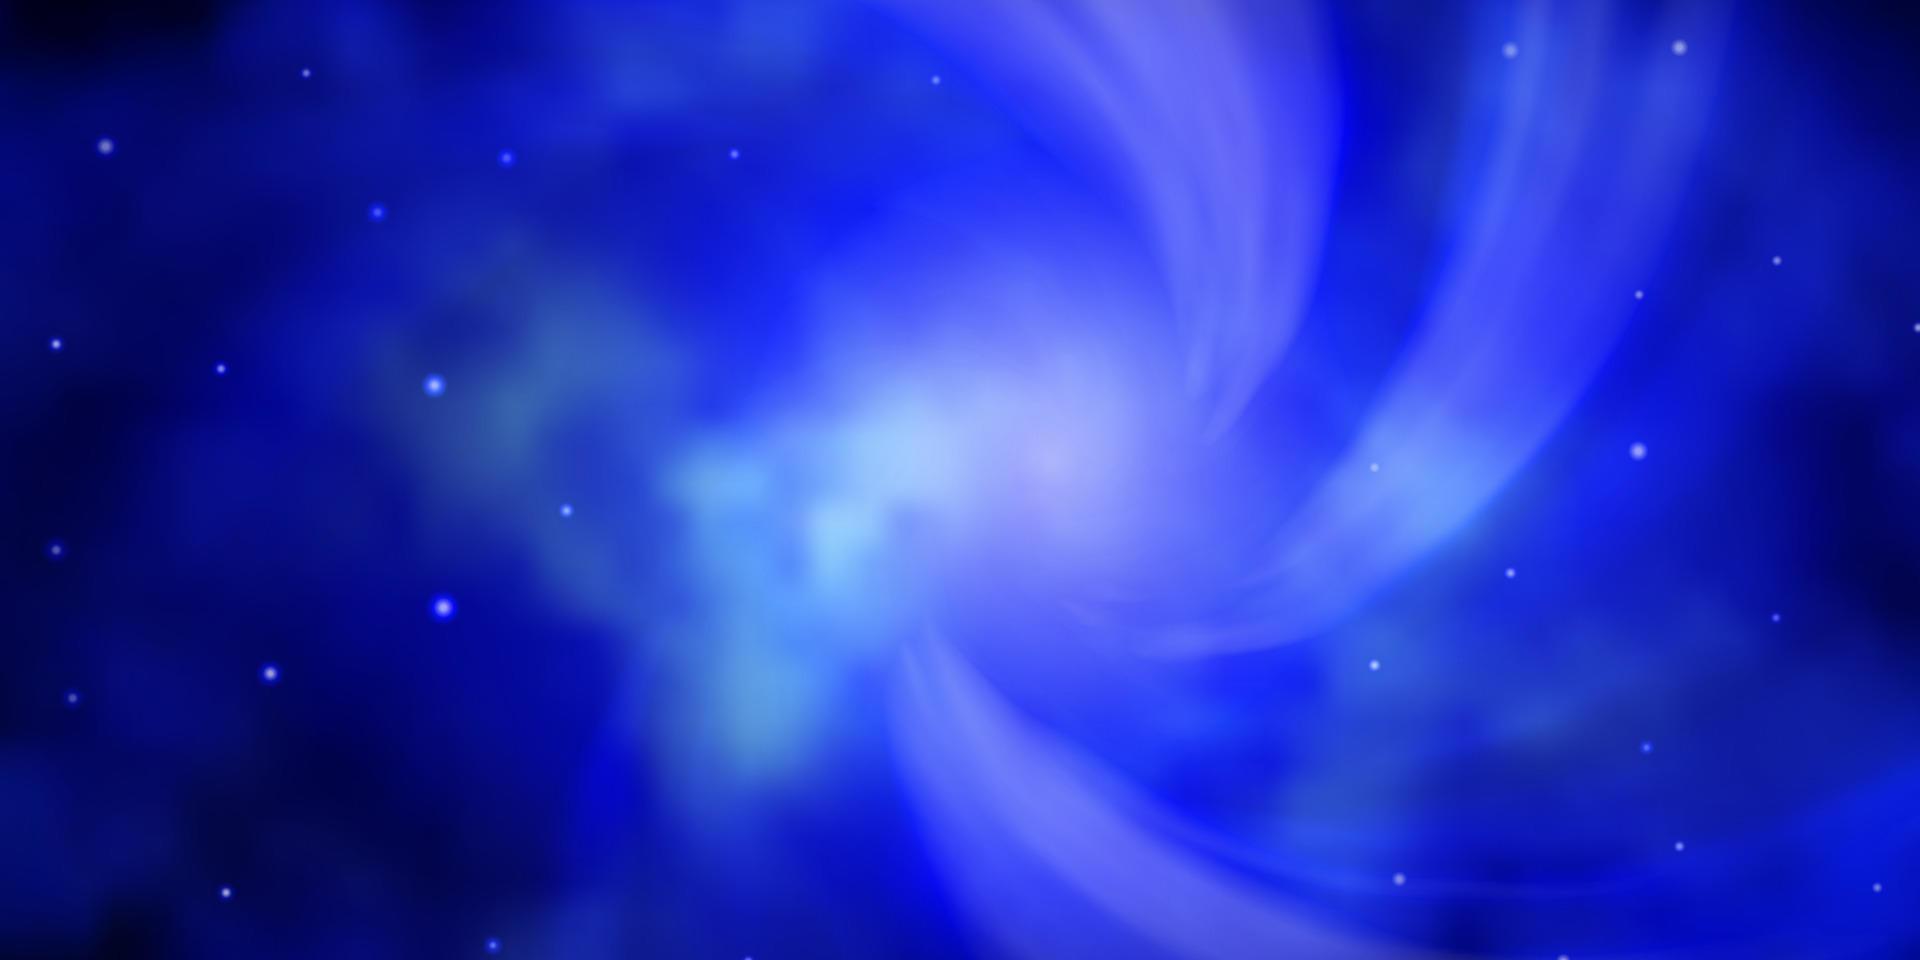 Dark BLUE vector texture with beautiful stars.